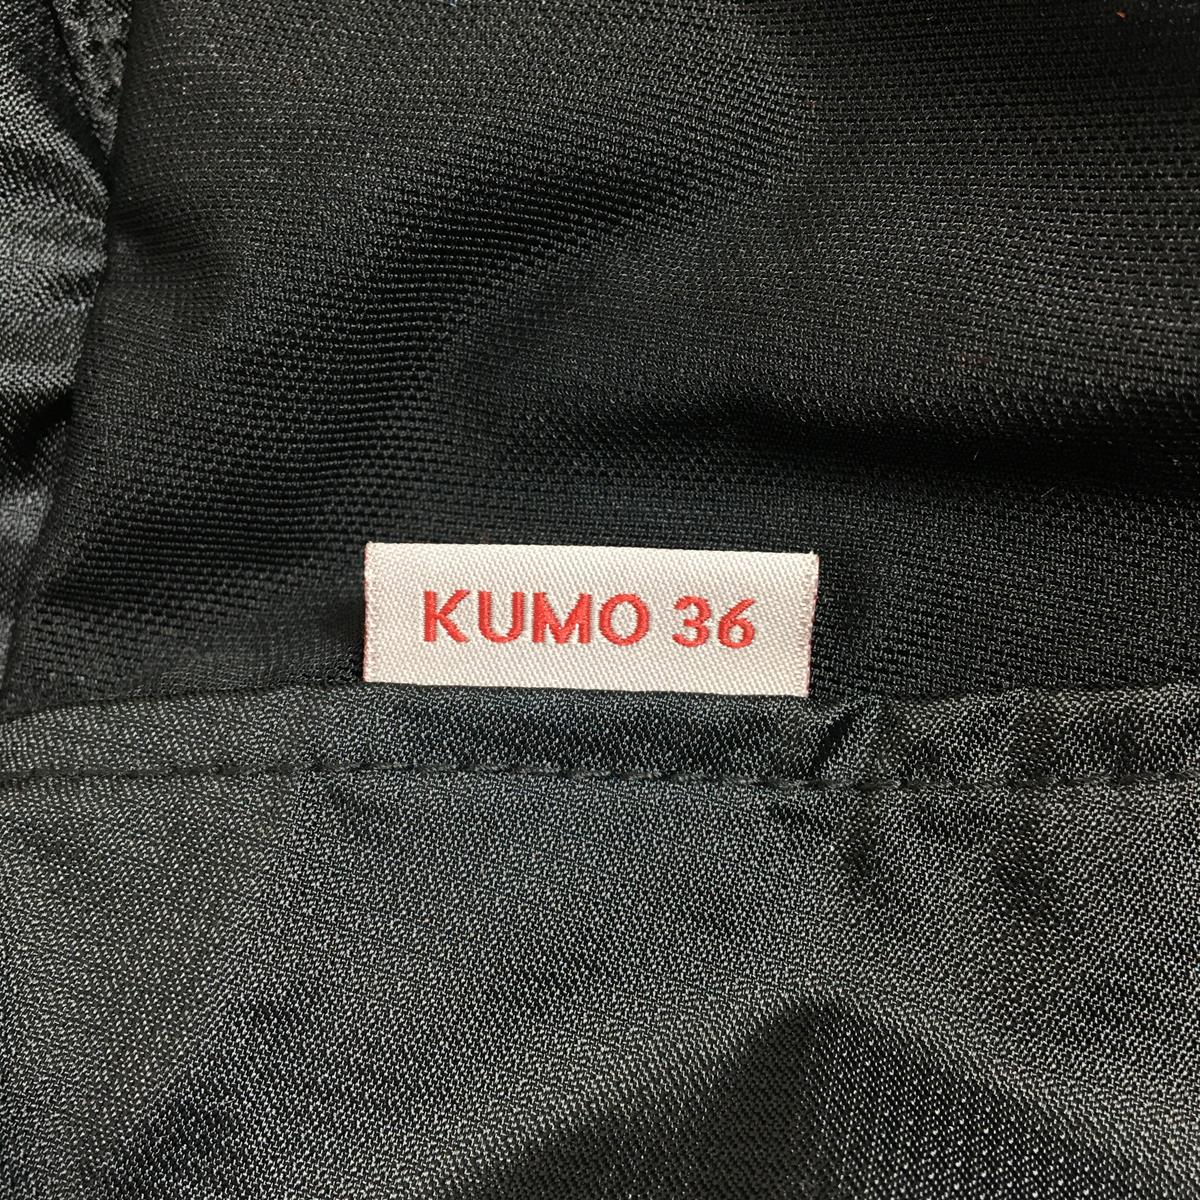 【M】 ゴッサマーギア クモ 36 スーパーライト Kumo 36 Superlight バックパック GOSSAMER GEAR グレー系